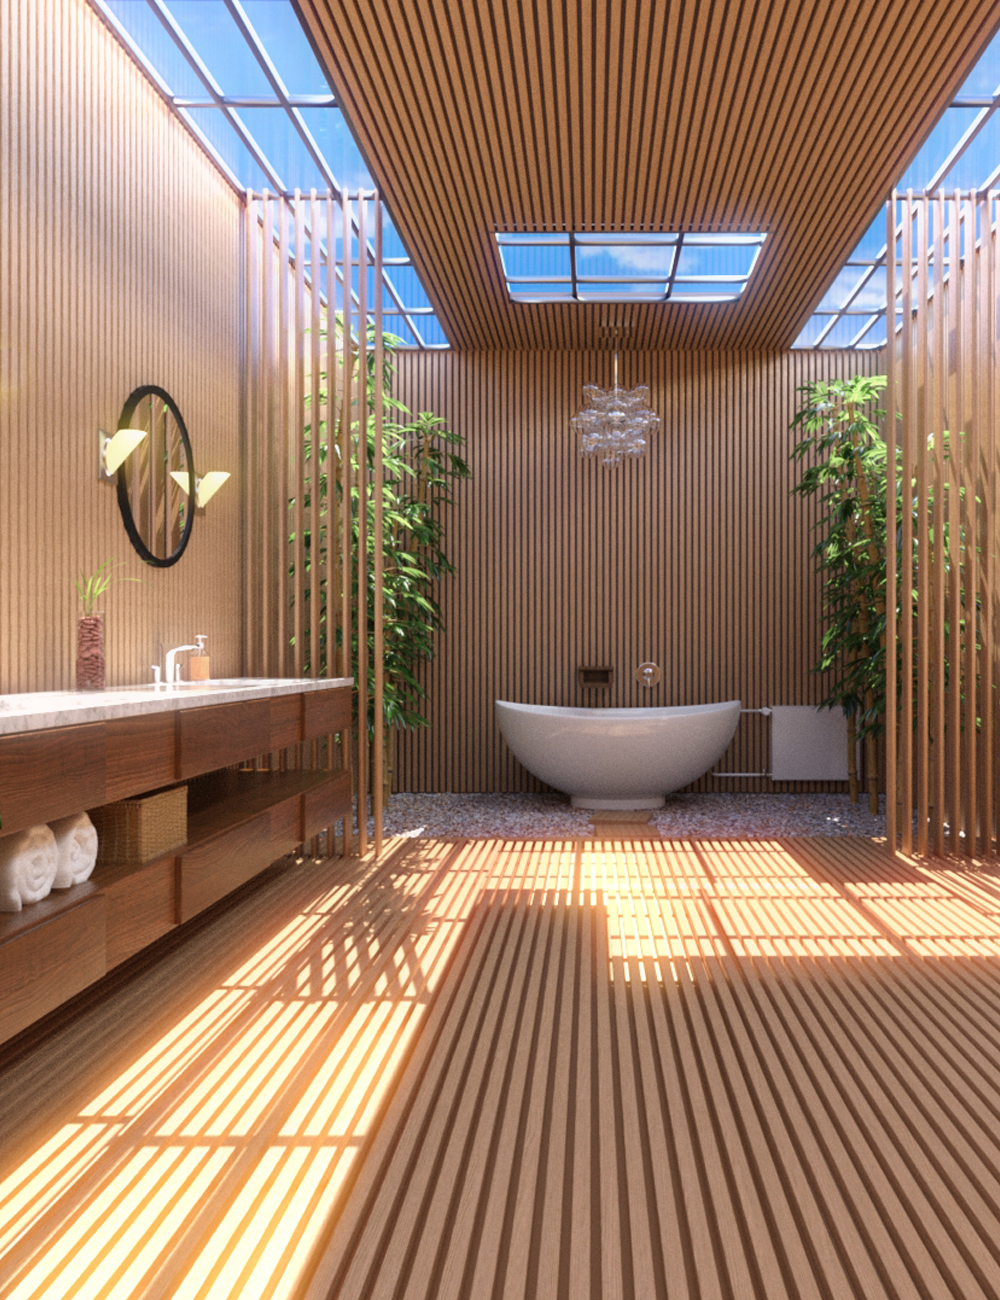 Fancy Japanese Bath by: Illumination, 3D Models by Daz 3D